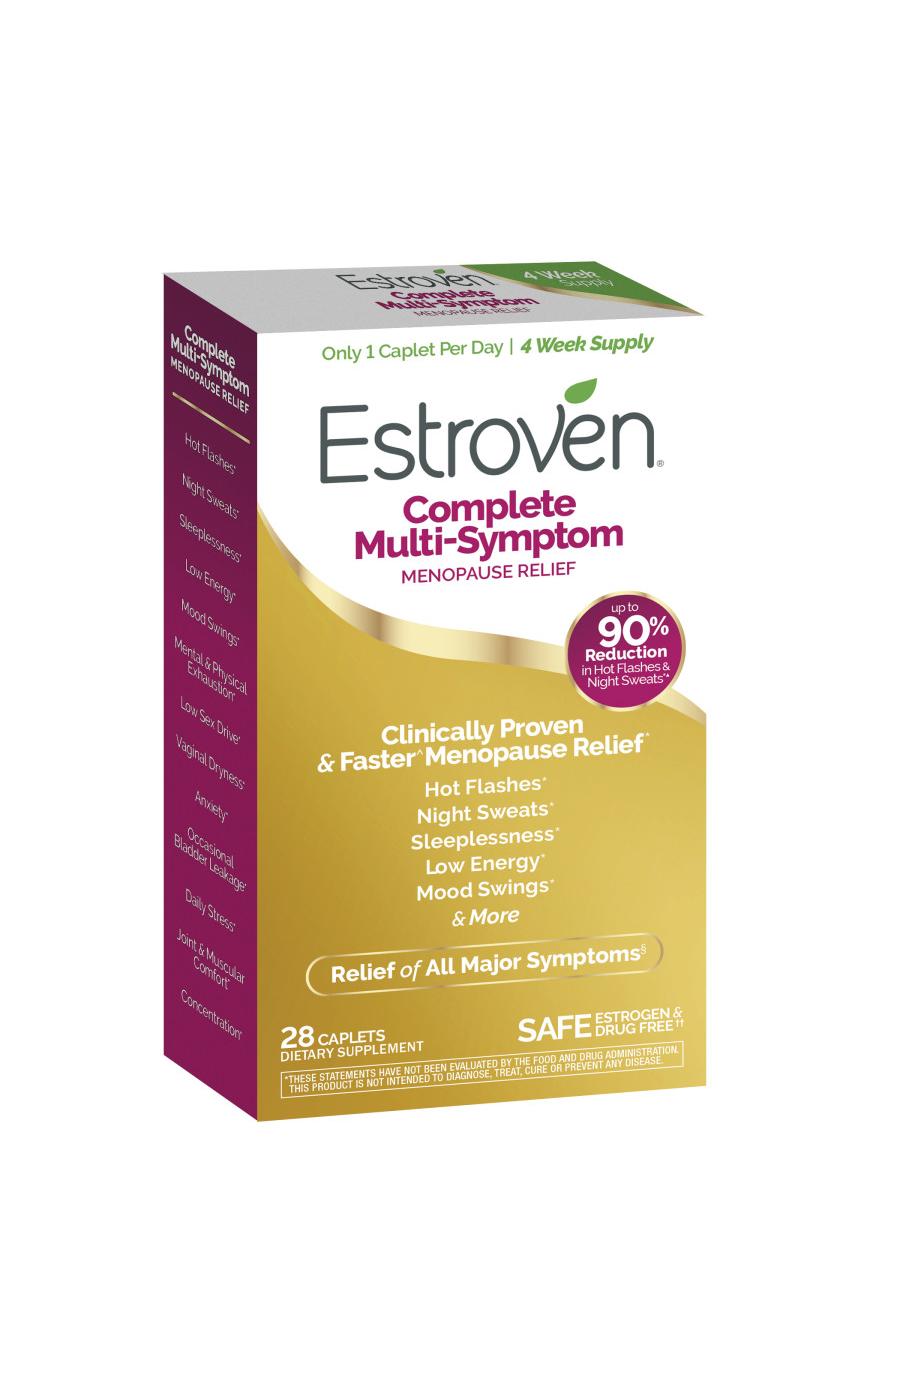 Estroven Complete Menopause Relief; image 1 of 4